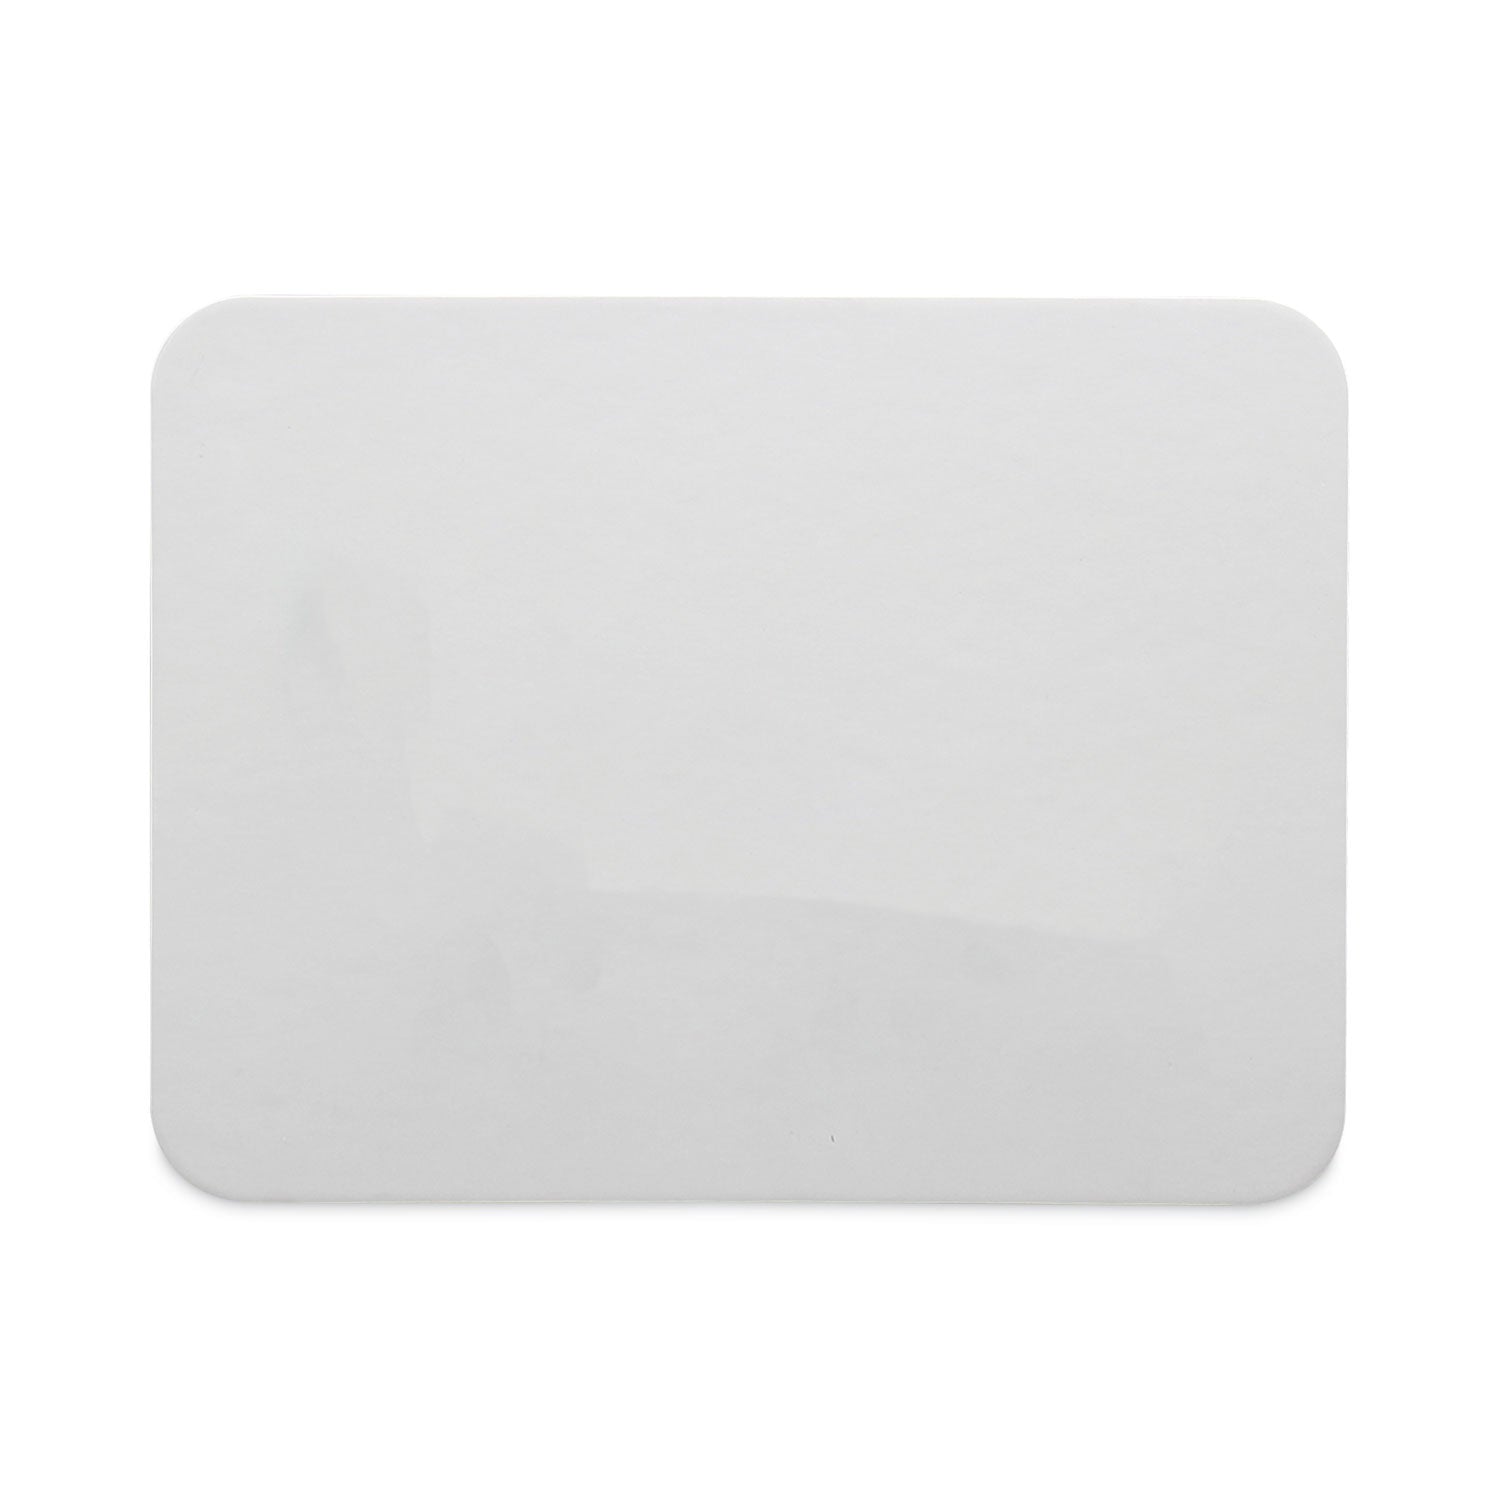 magnetic-dry-erase-board-36-x-24-white-surface_flp10027 - 1